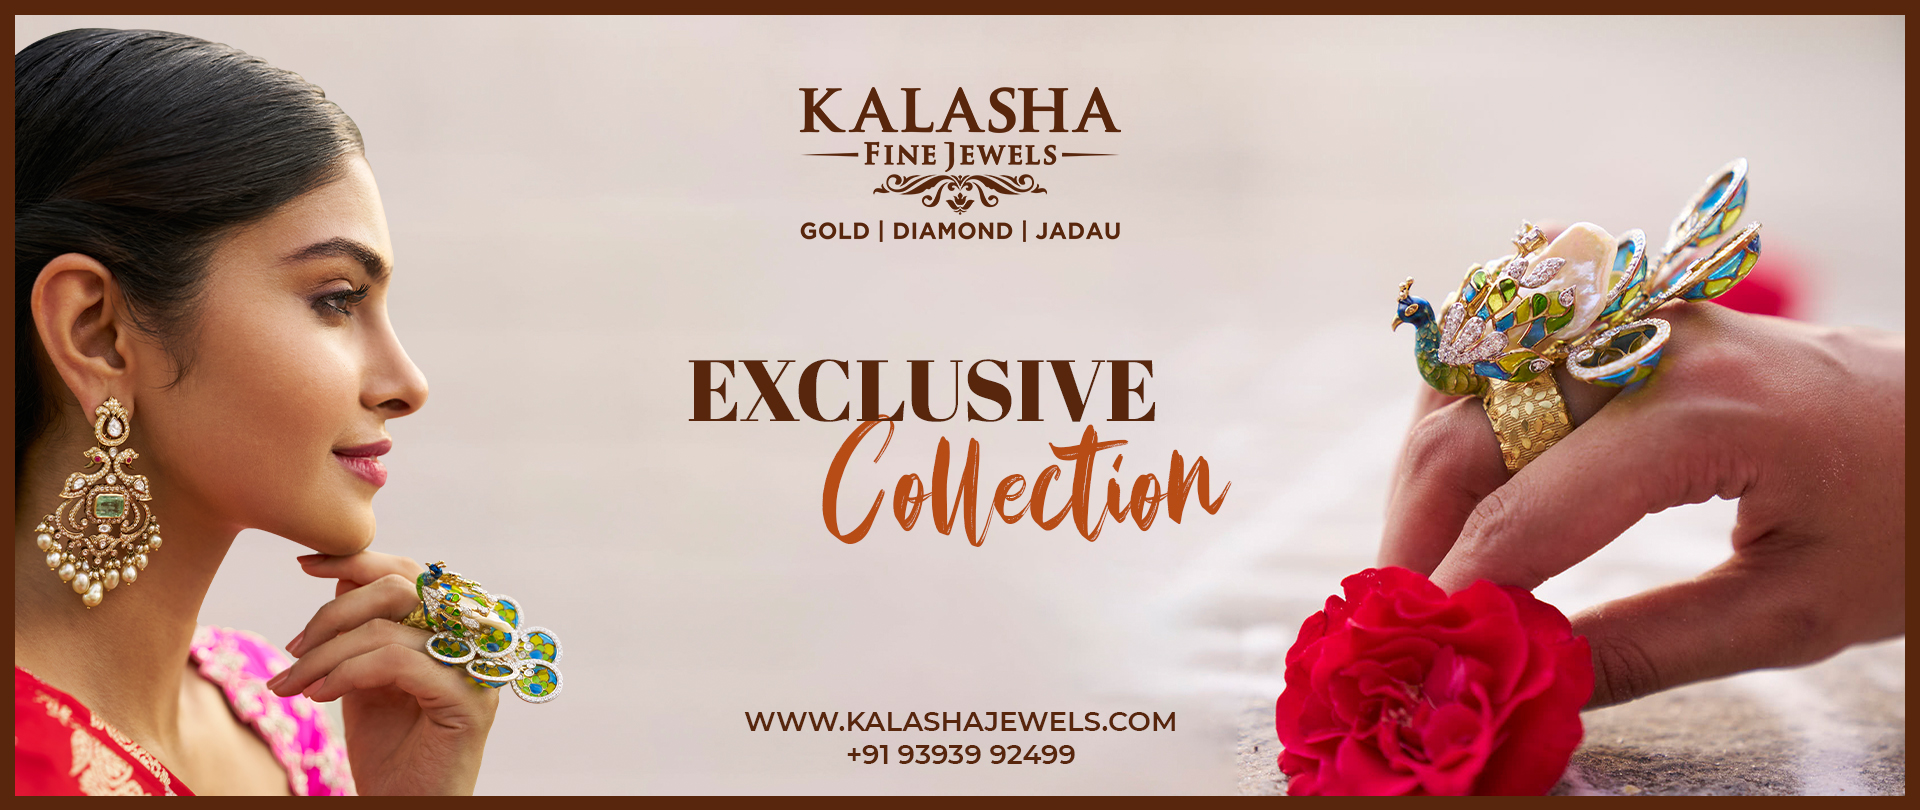 Kalasha Fine Jewels 